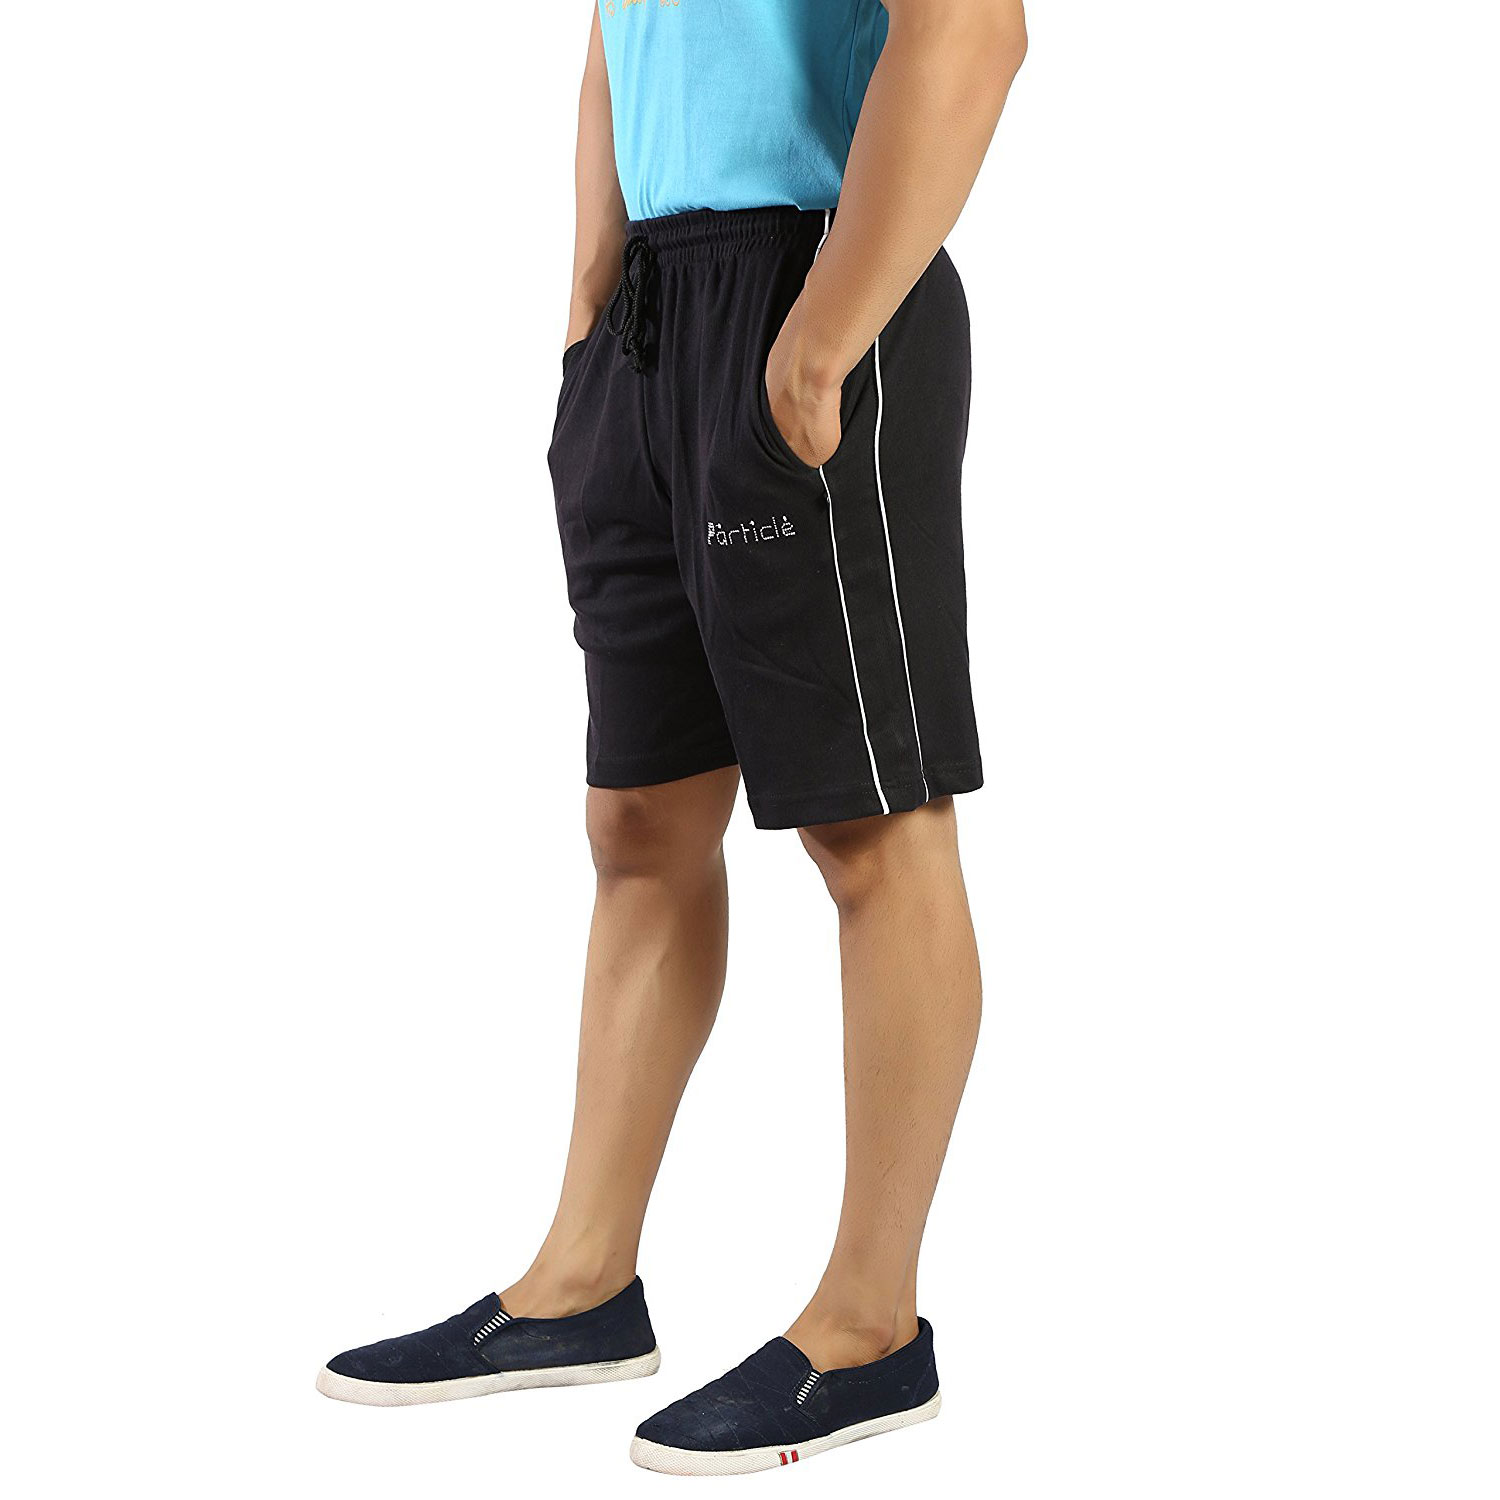  Particle Shorts - Mens Half Pants Cotton Casual Regular Fit Black Shorts